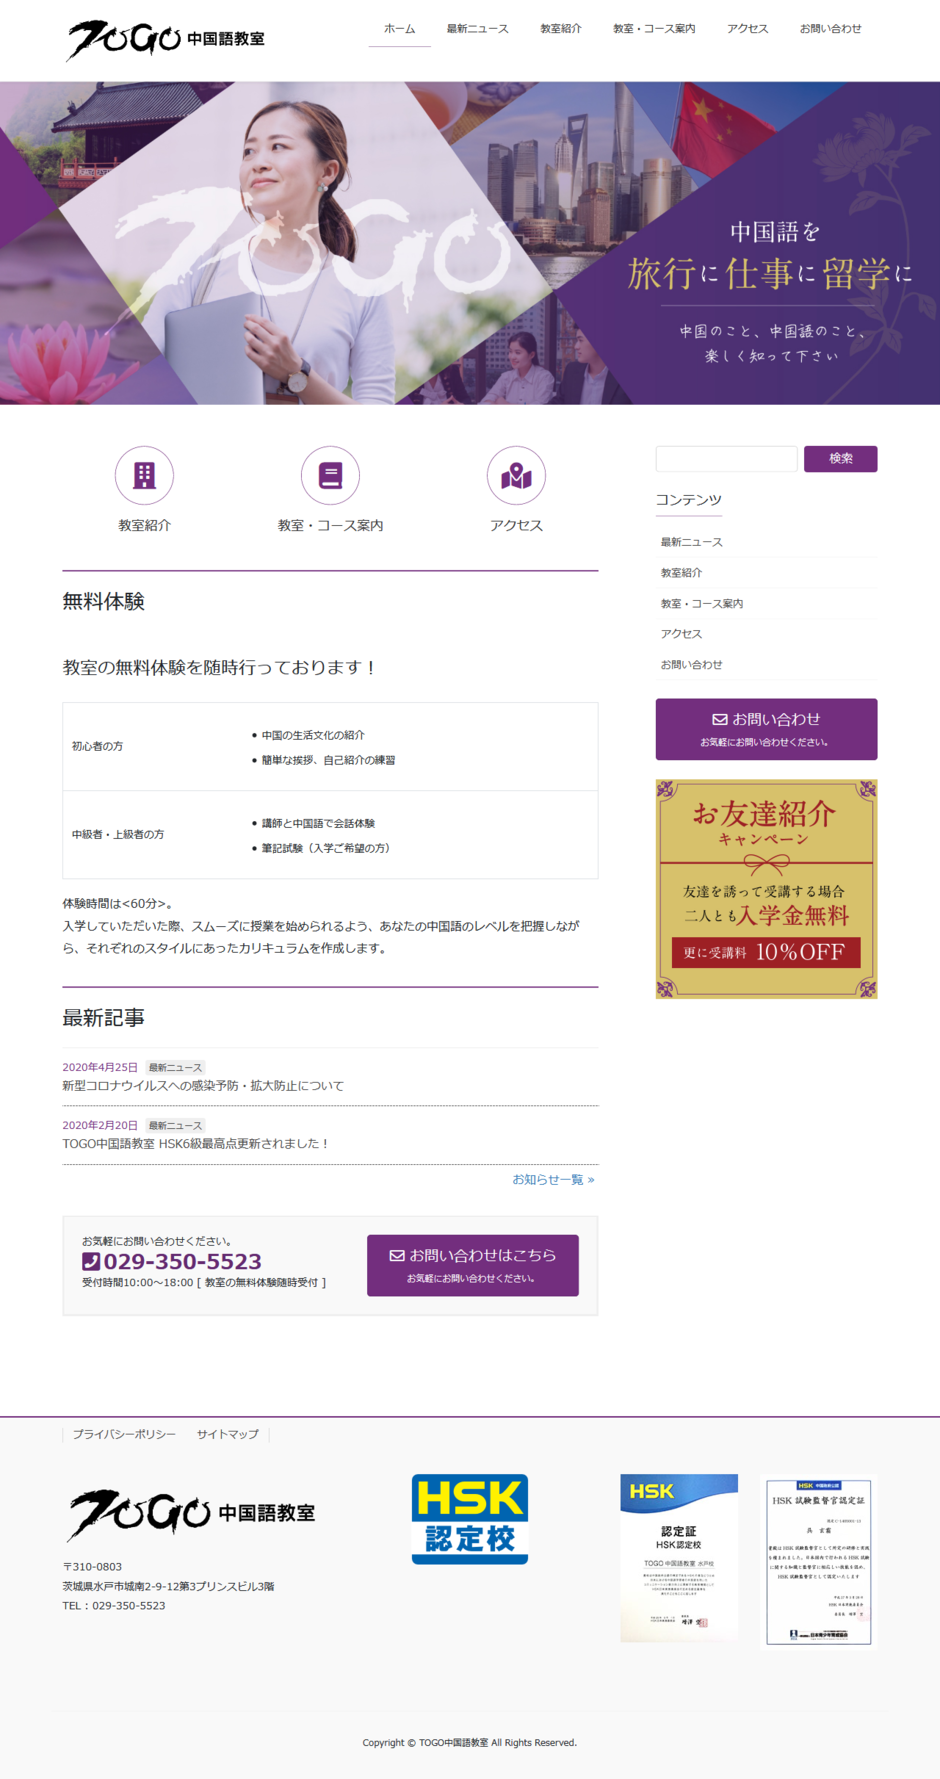 TOGO中国語教室の画面